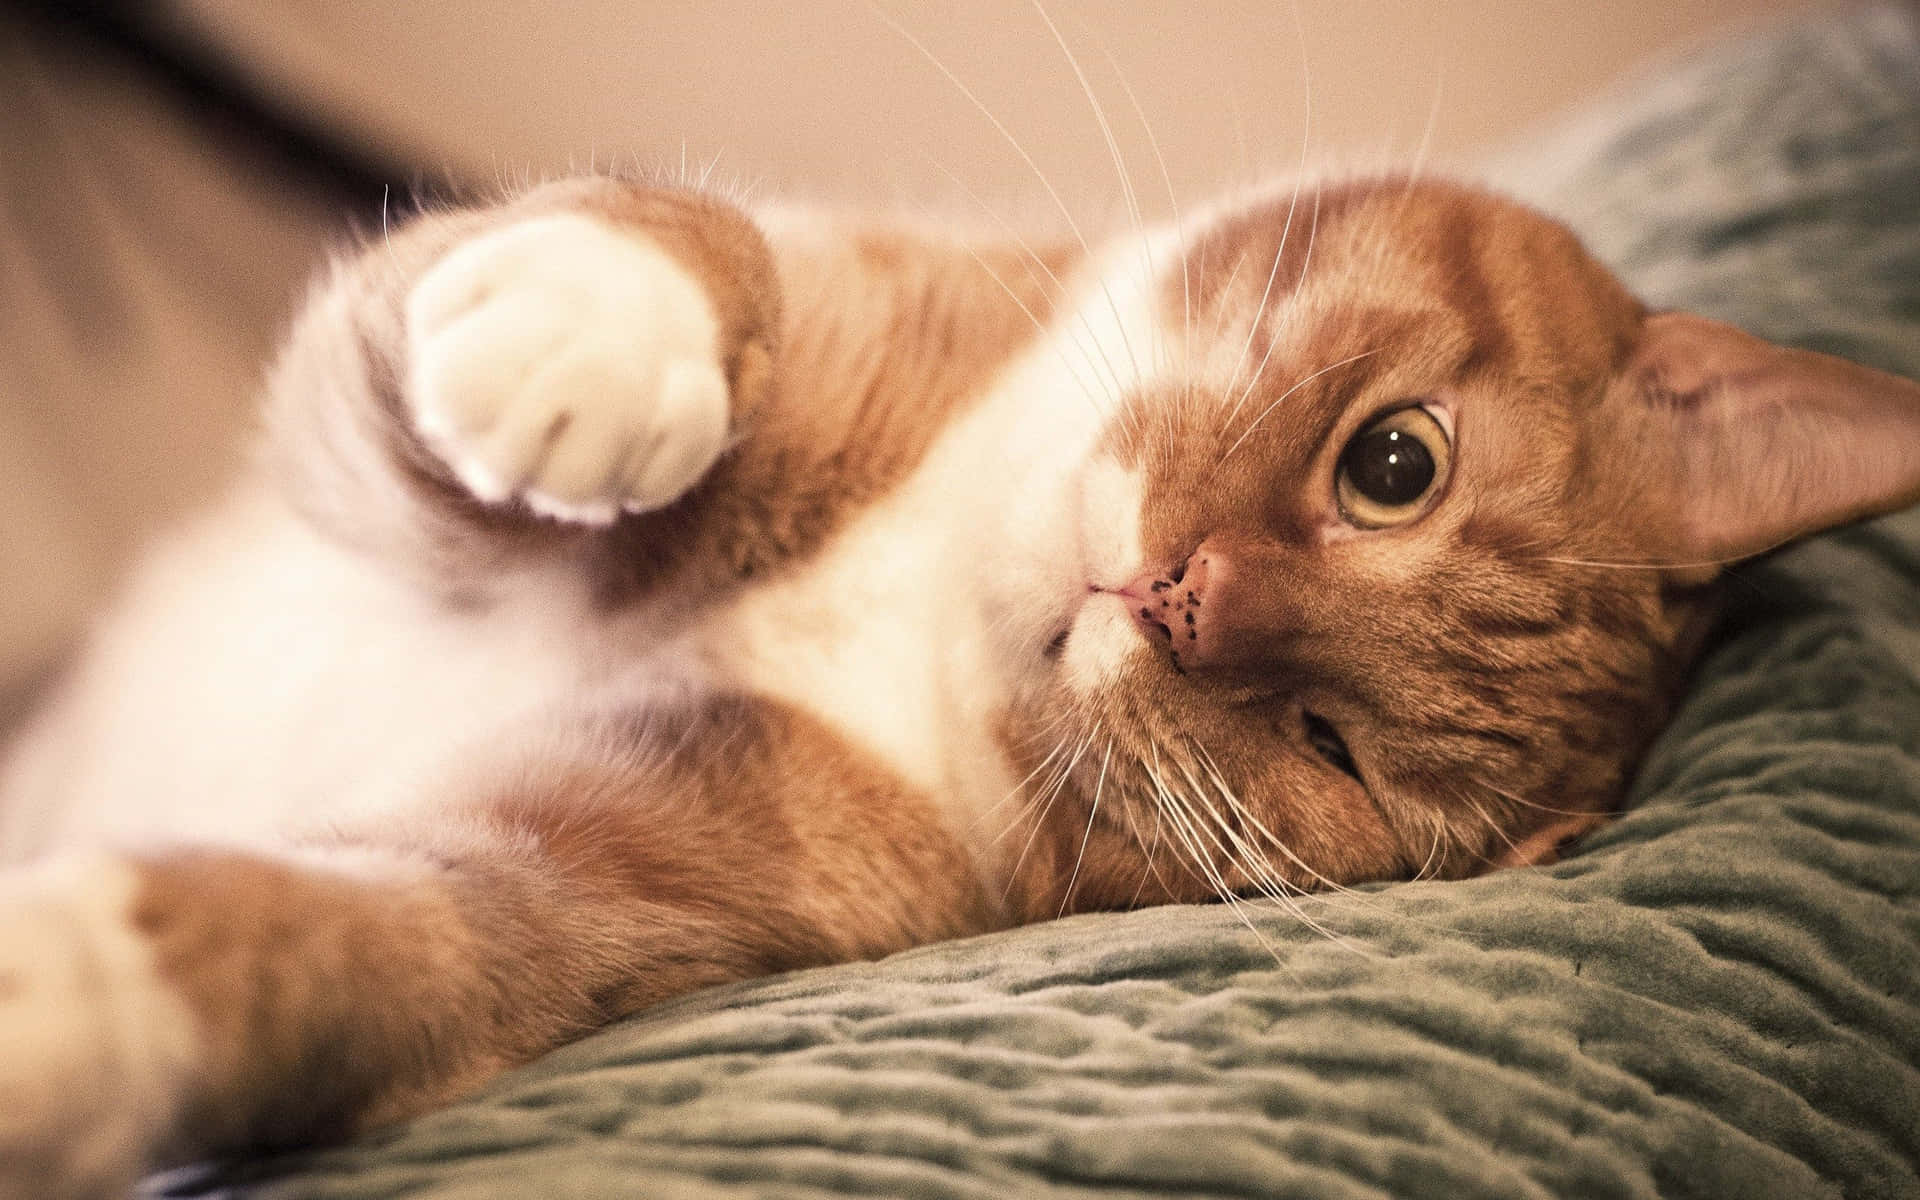 Adorable Orange Tabby Cat Lounging in Comfort